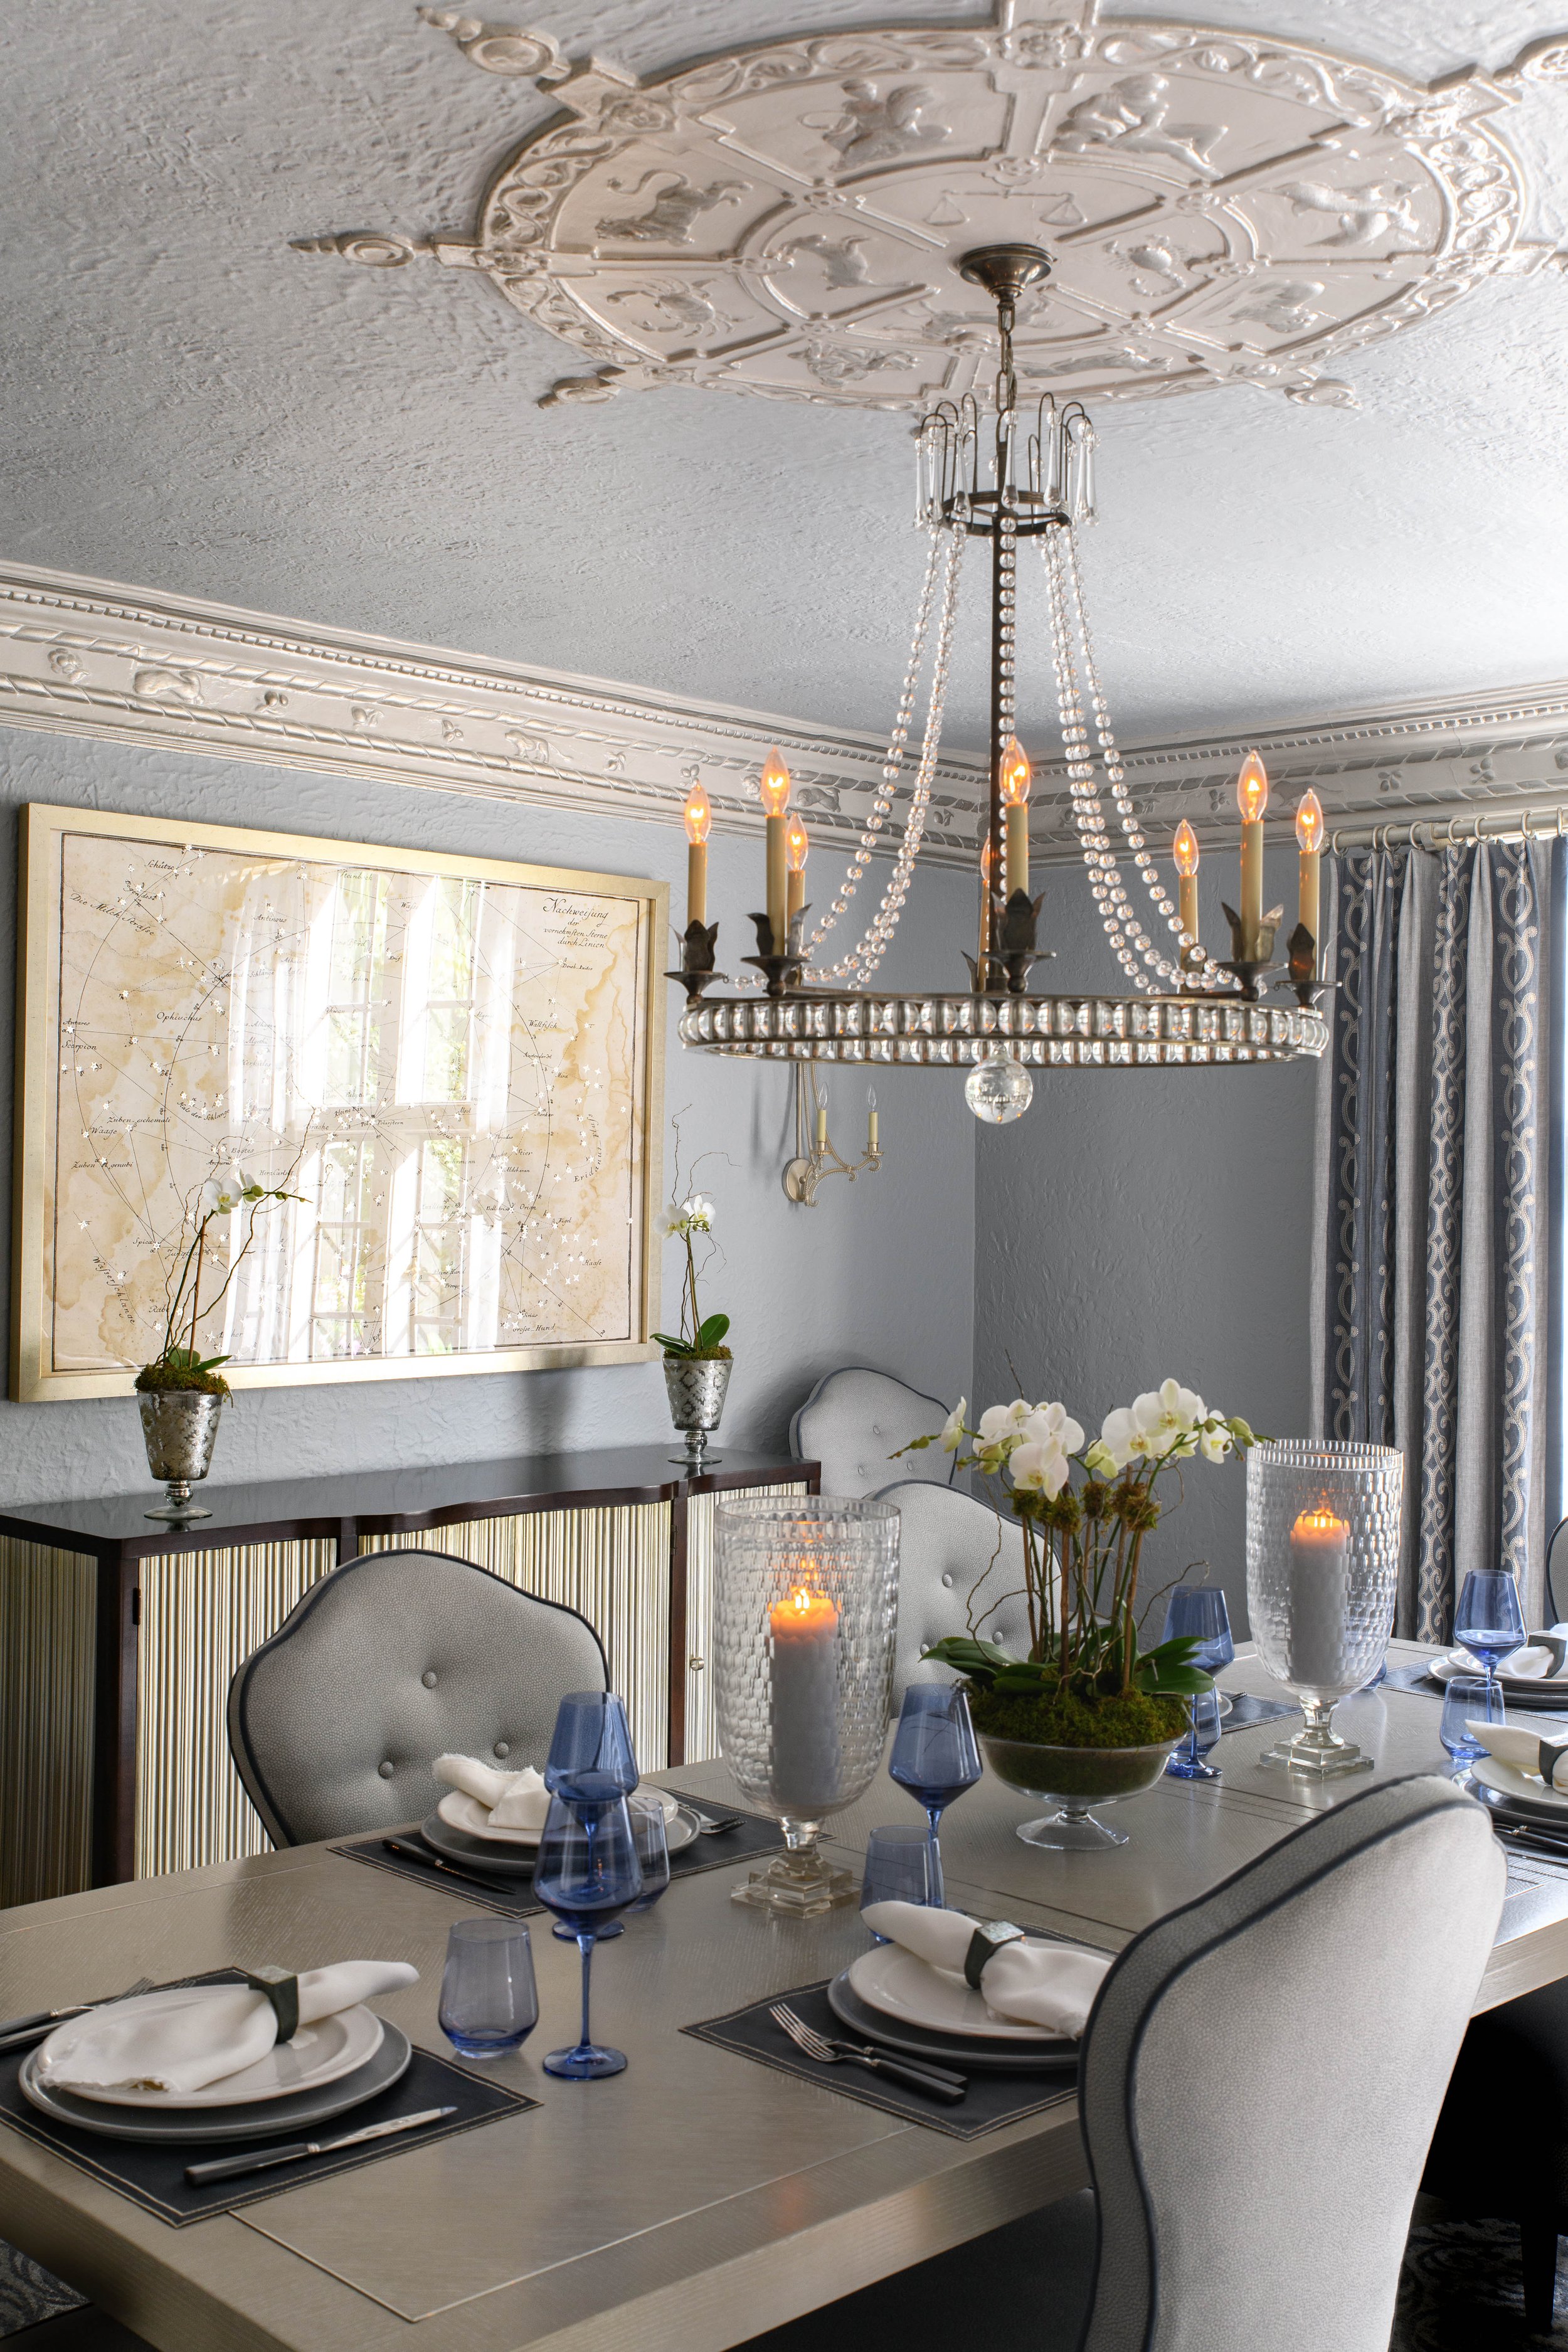 8-large-print-unique-chandelier-blue-glasses-gray-white-accents-westechester-rinfret-interior-designs.jpg